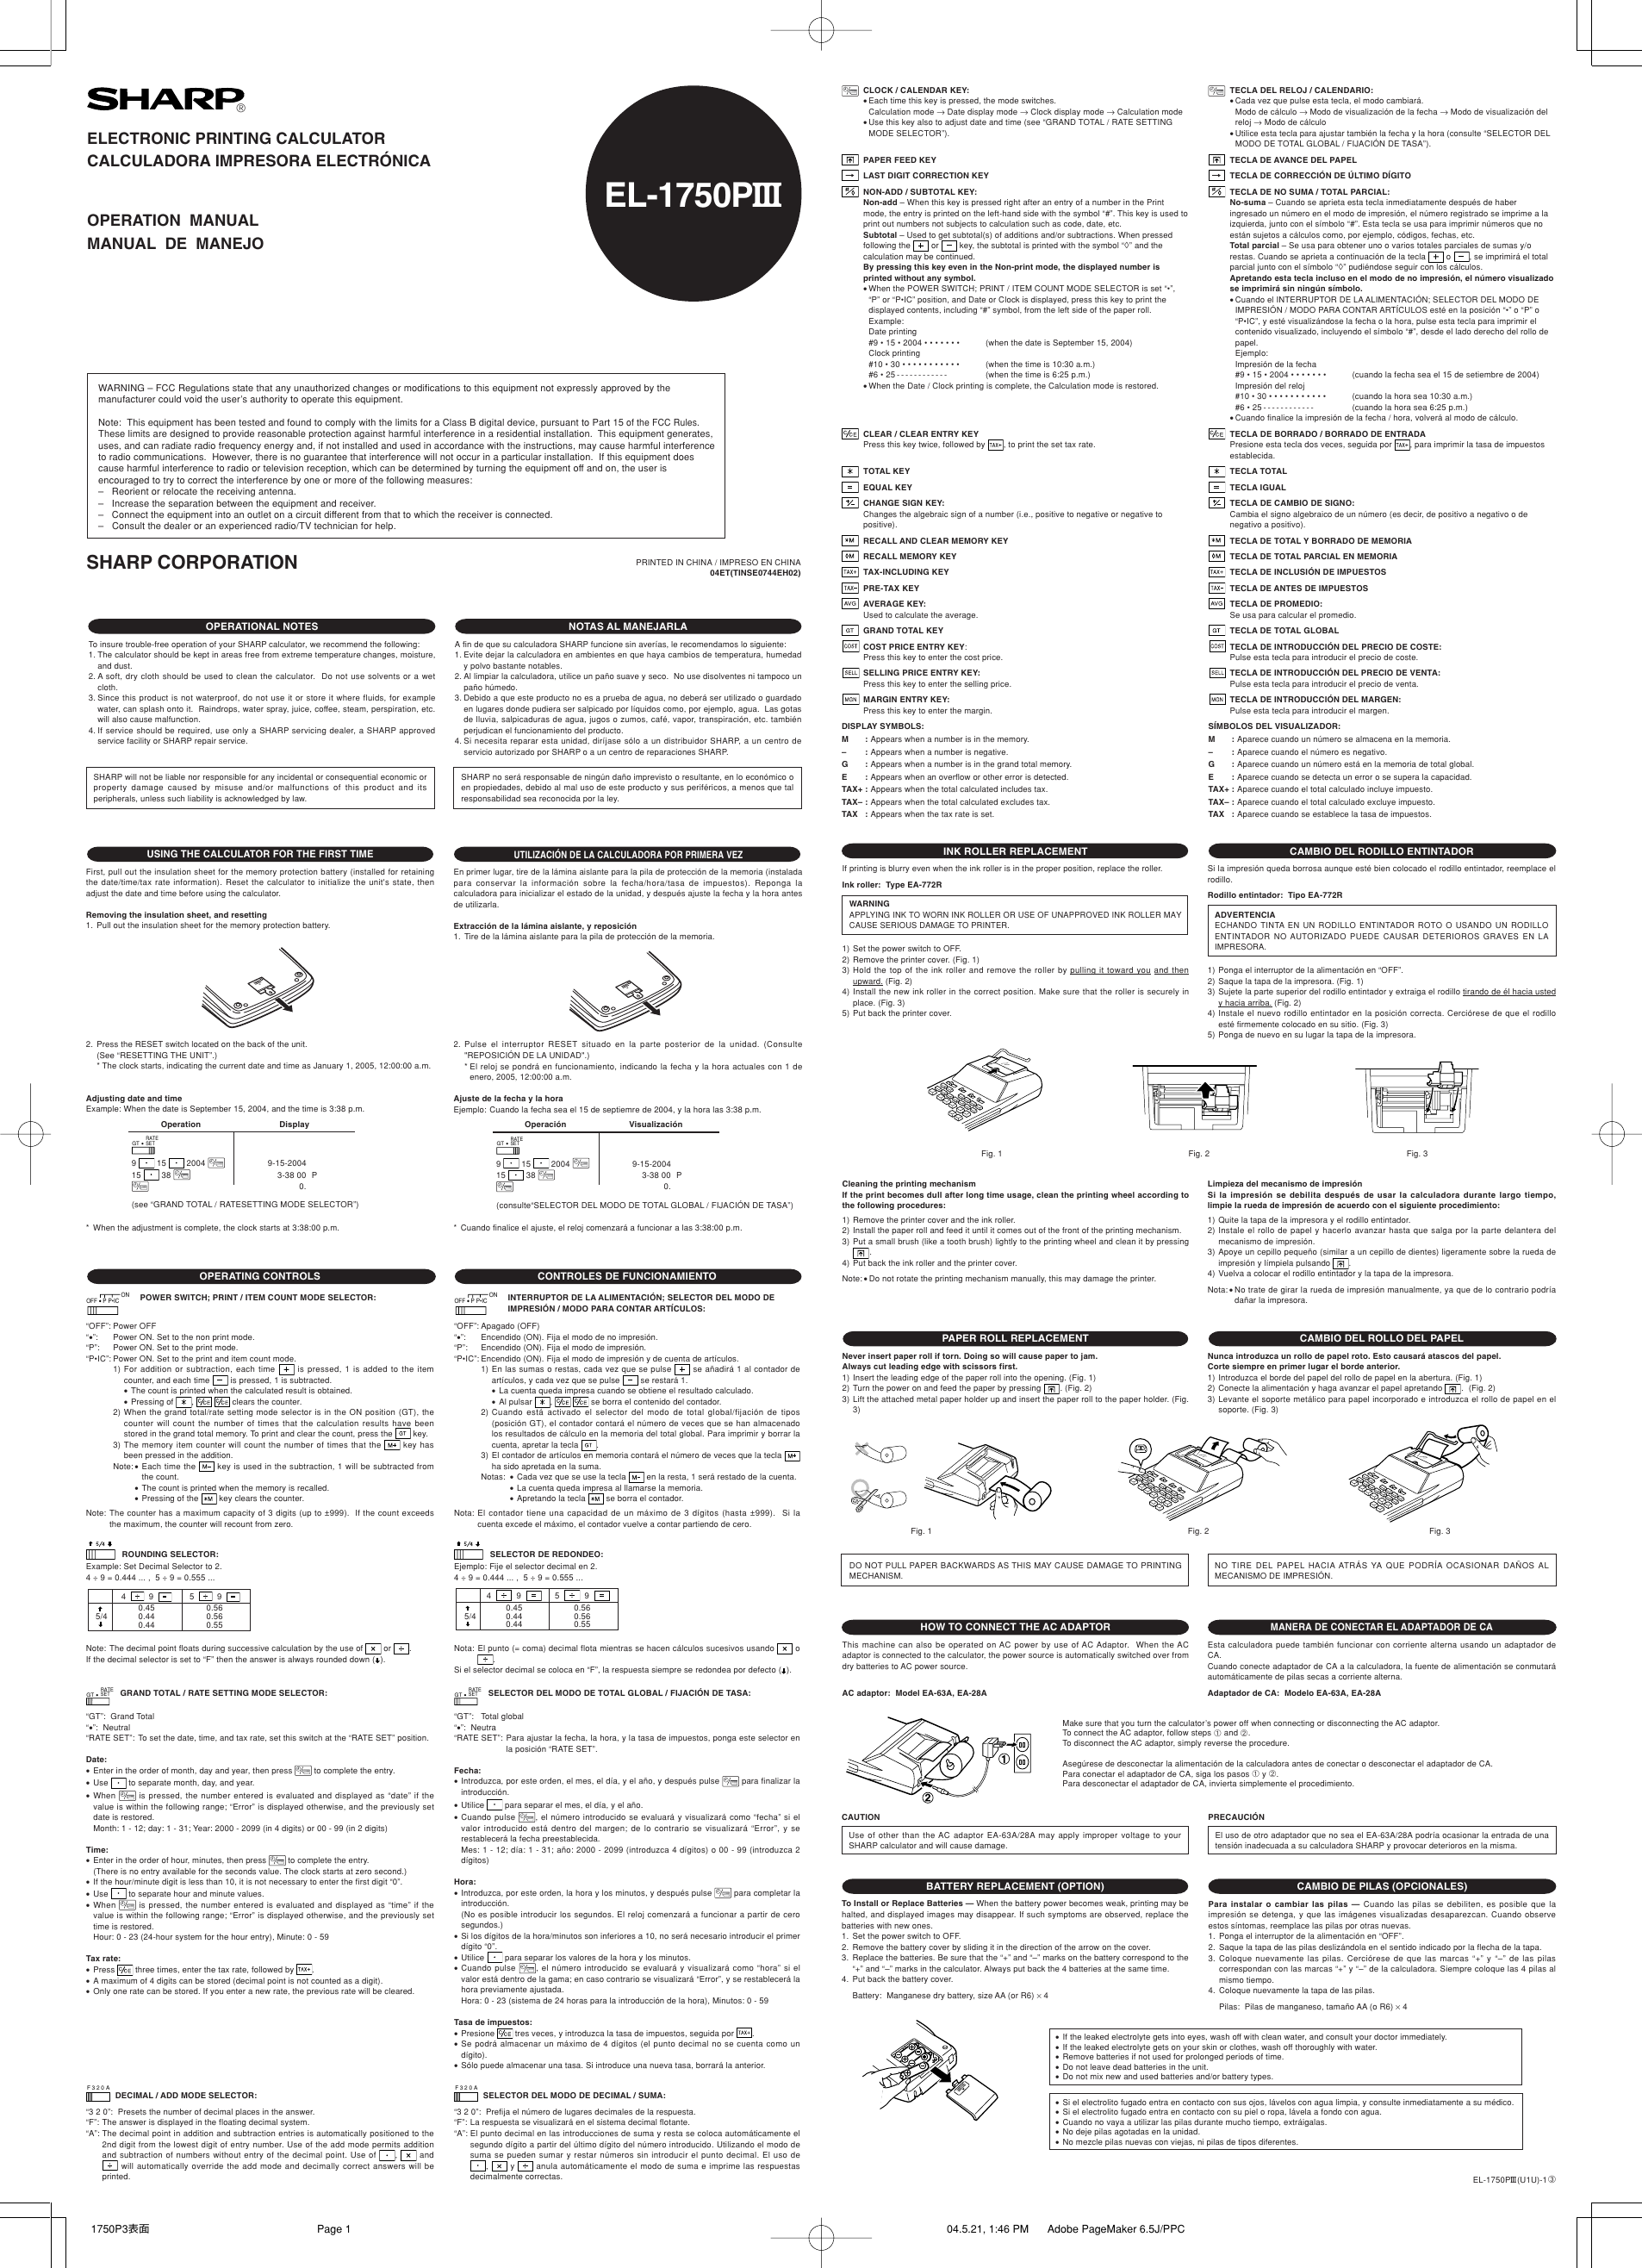 Page 1 of 2 - Sharp Sharp-Sharp-Calculator-El-1750Piii-Users-Manual- EL-1750PIII Operation Manual  Sharp-sharp-calculator-el-1750piii-users-manual